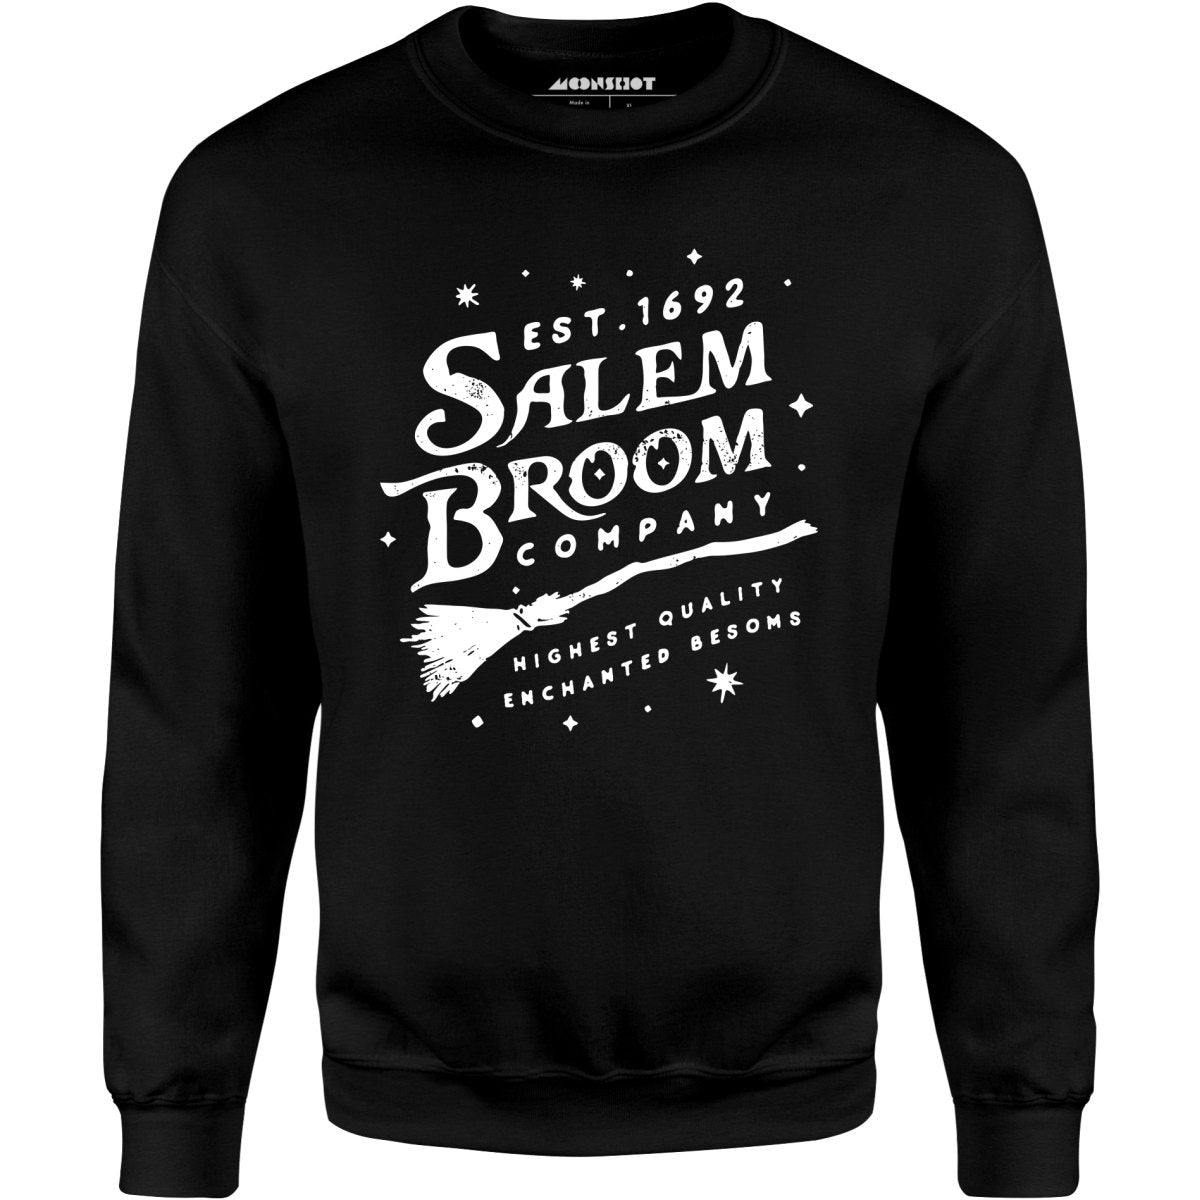 Salem Broom Company - Unisex Sweatshirt